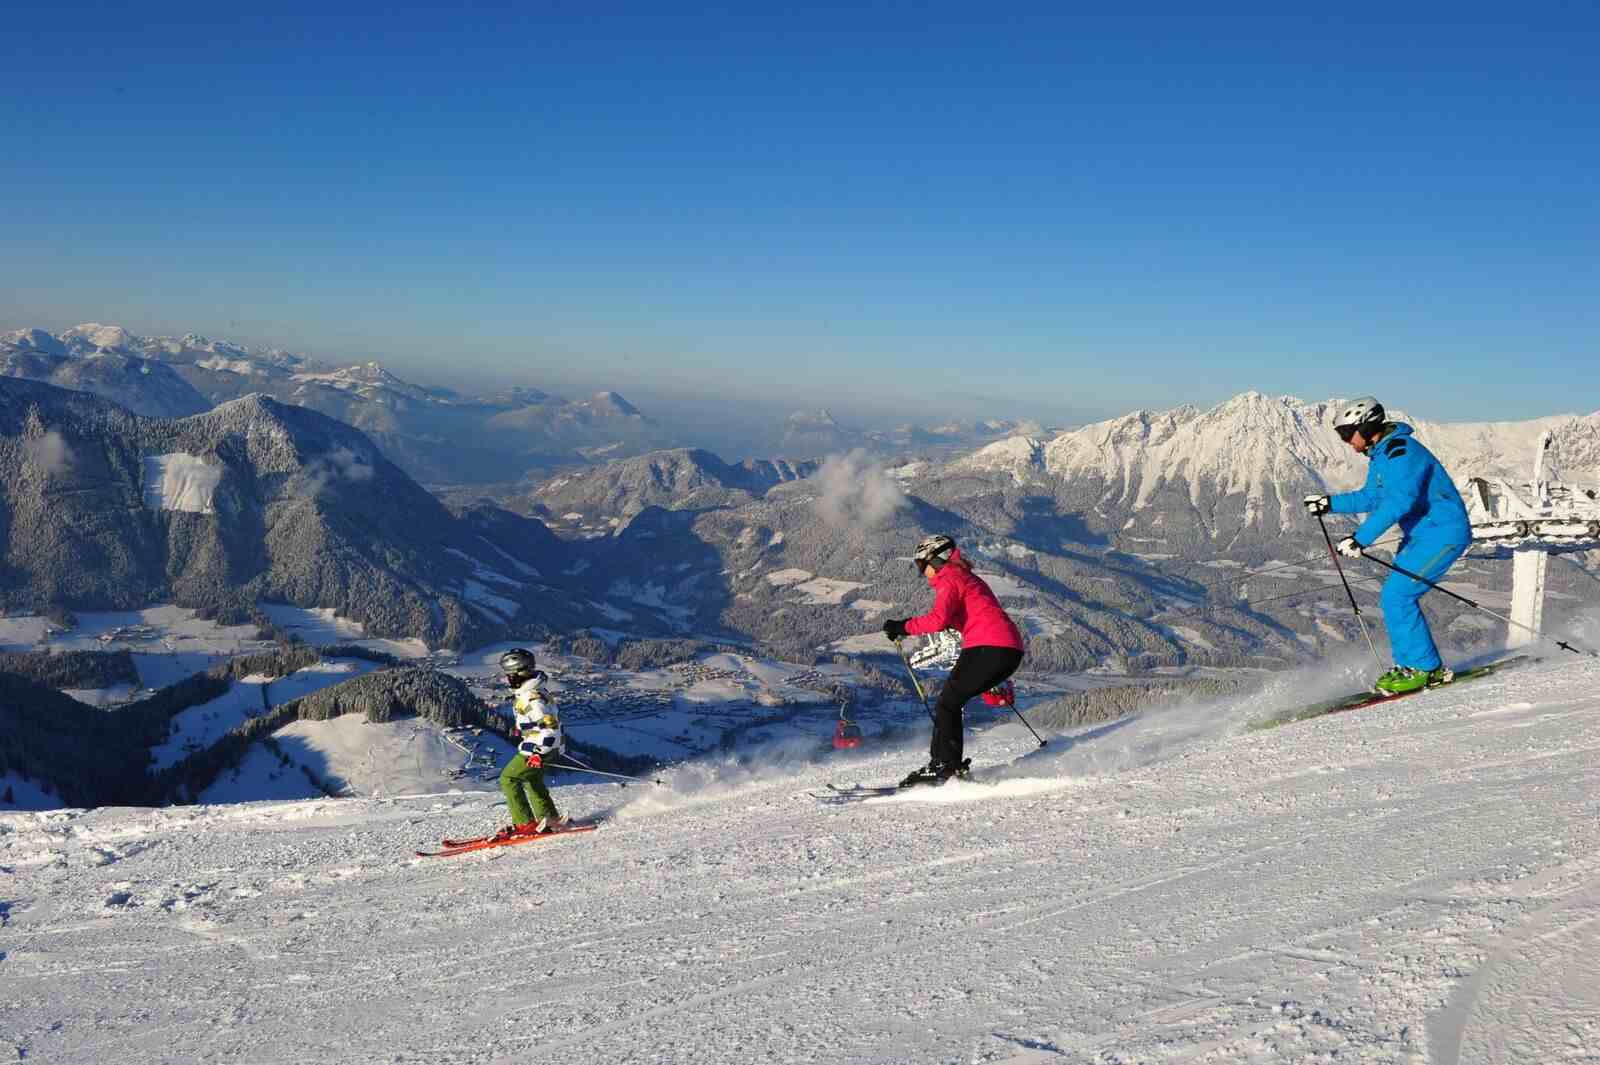 skiwelt_000913_familien-skifahren-in-der-skiwelt_christian-kapfinger_preview.jpg